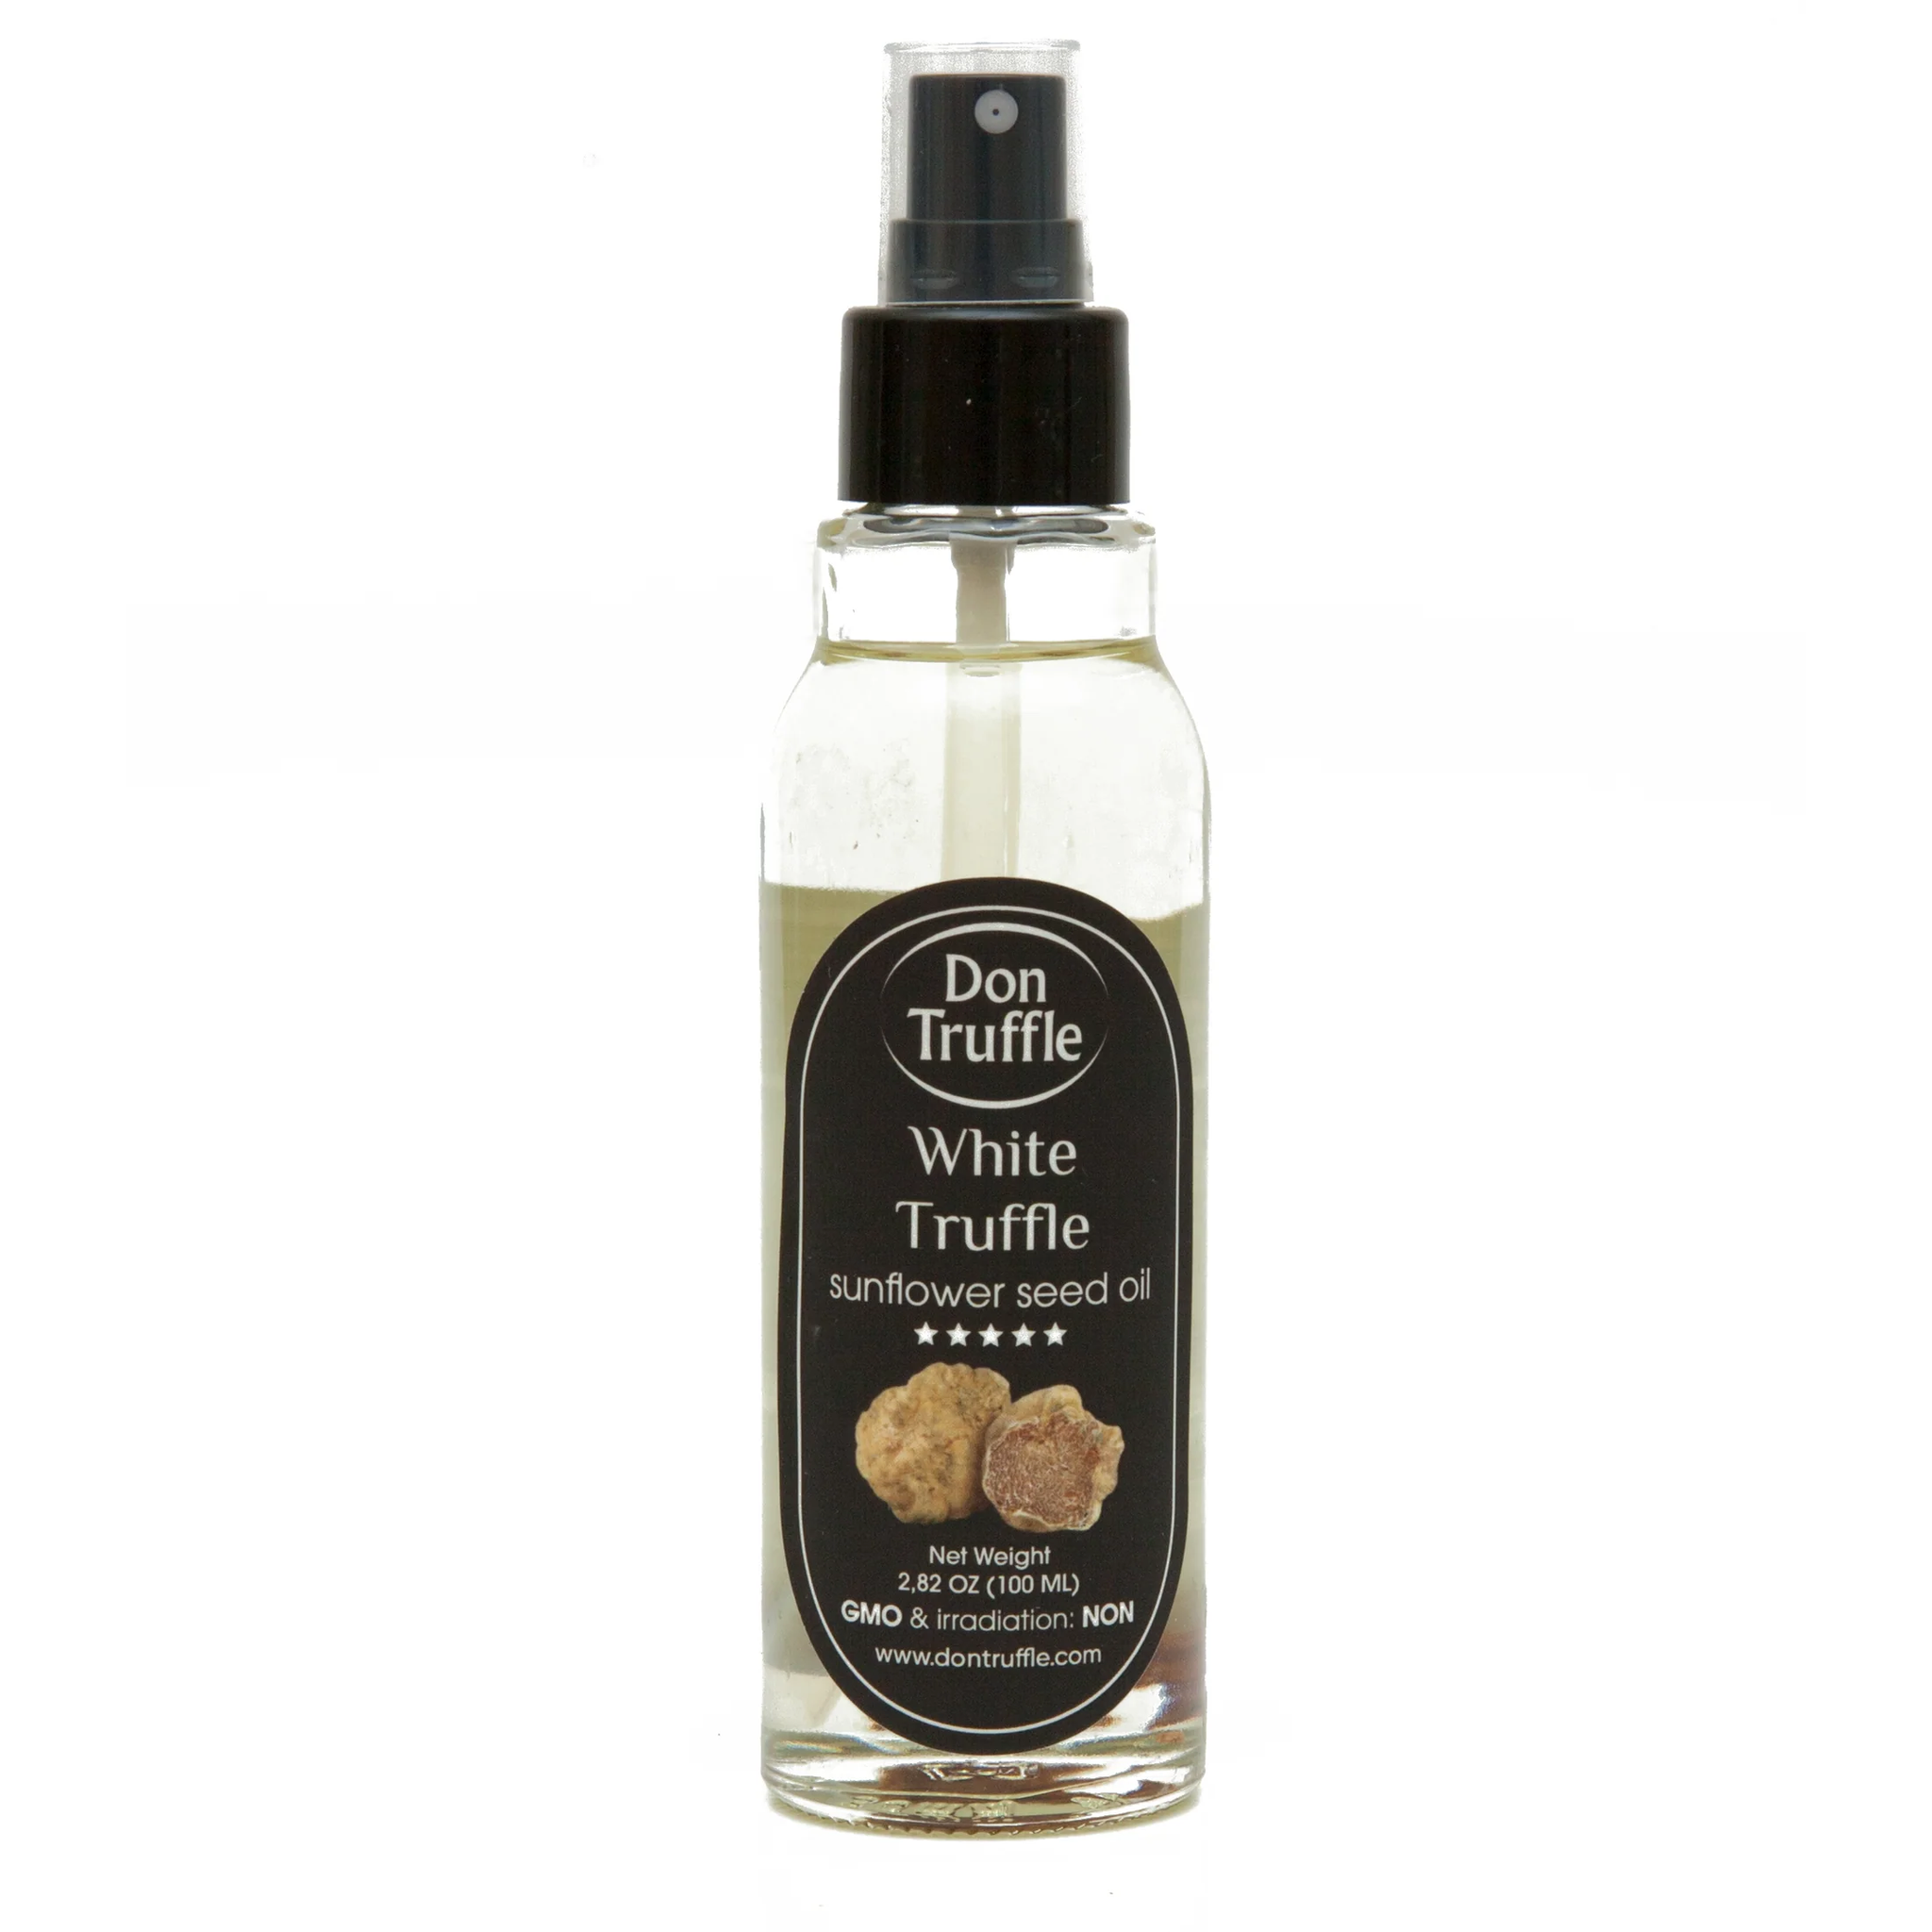 White Truffle sunflower seed oil spray 2,82 OZ (100ml)